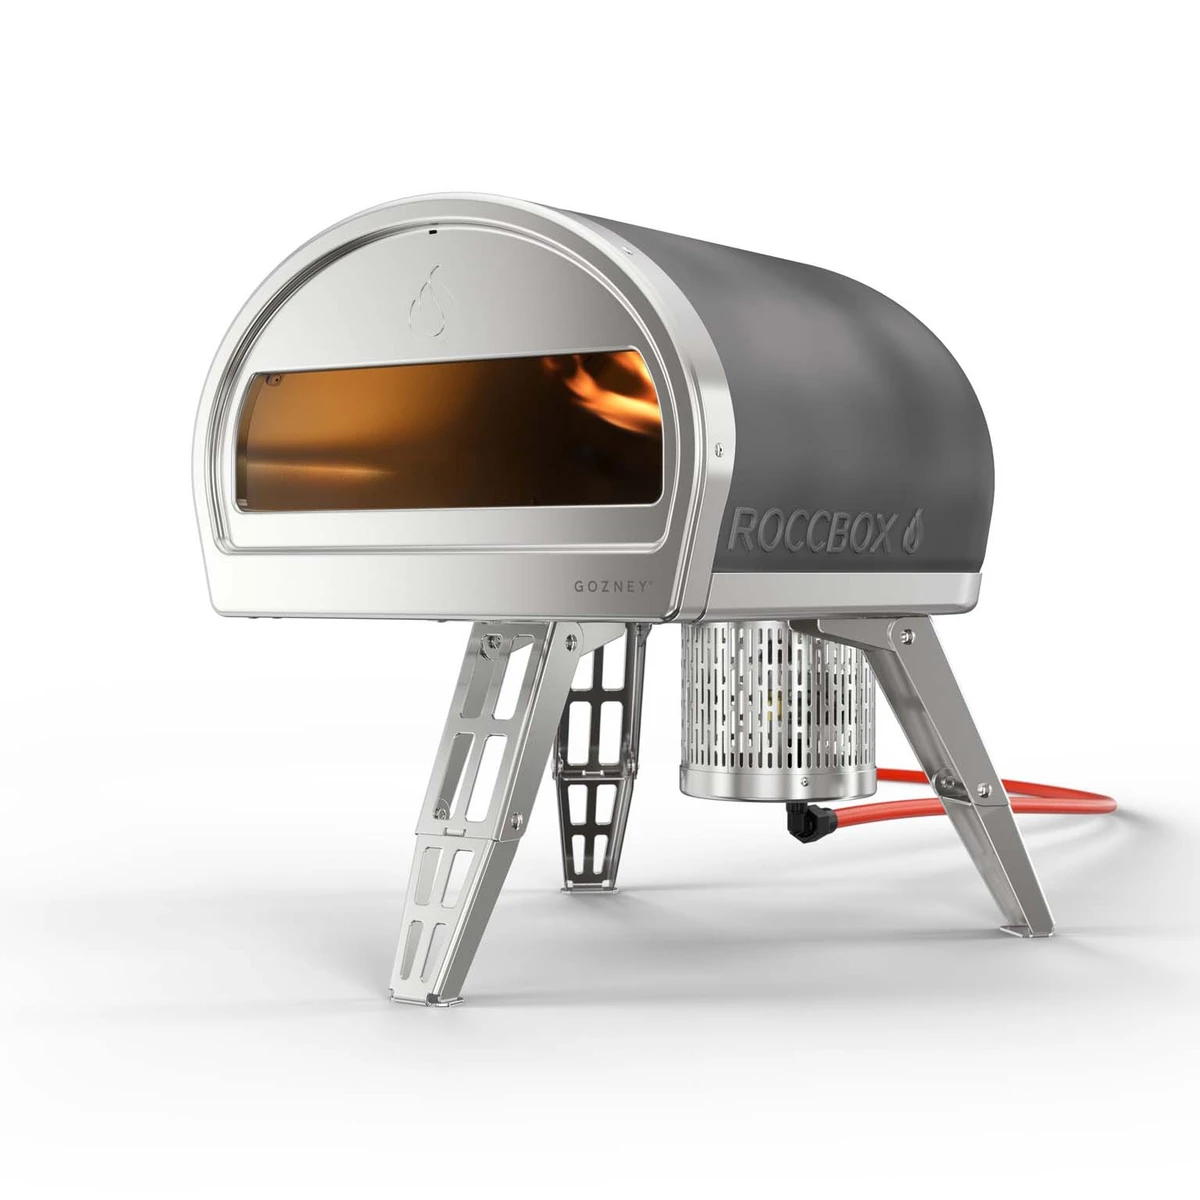 Roccbox Pizza Oven - Grey - image 2